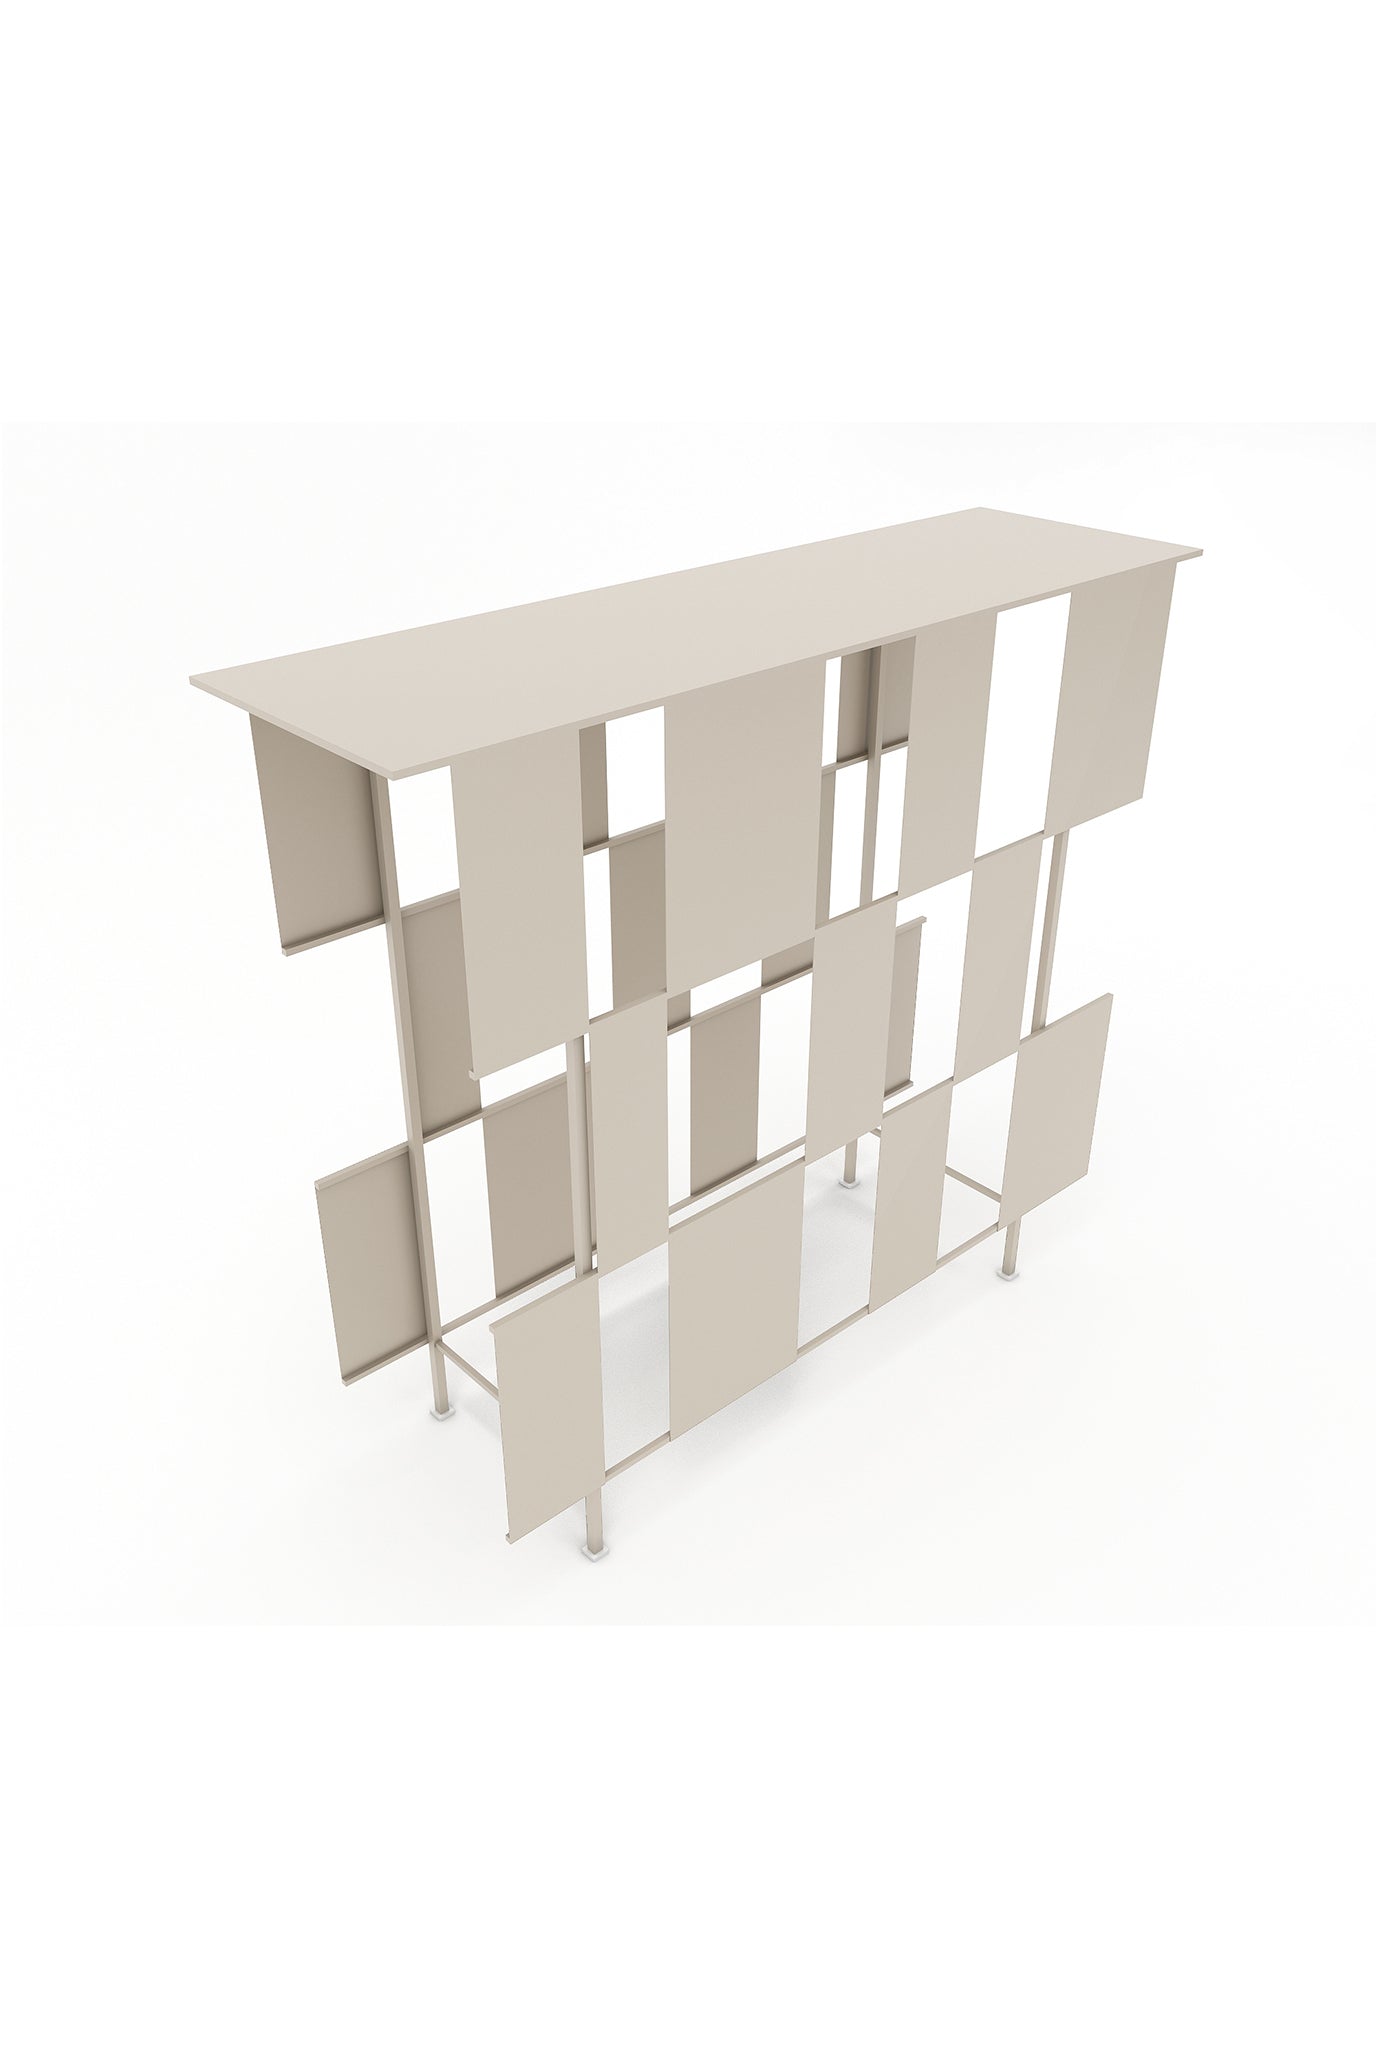 handcrafted-jodi- metal frame-futuristic-accent table- side table-jodi- mesh design-minimal